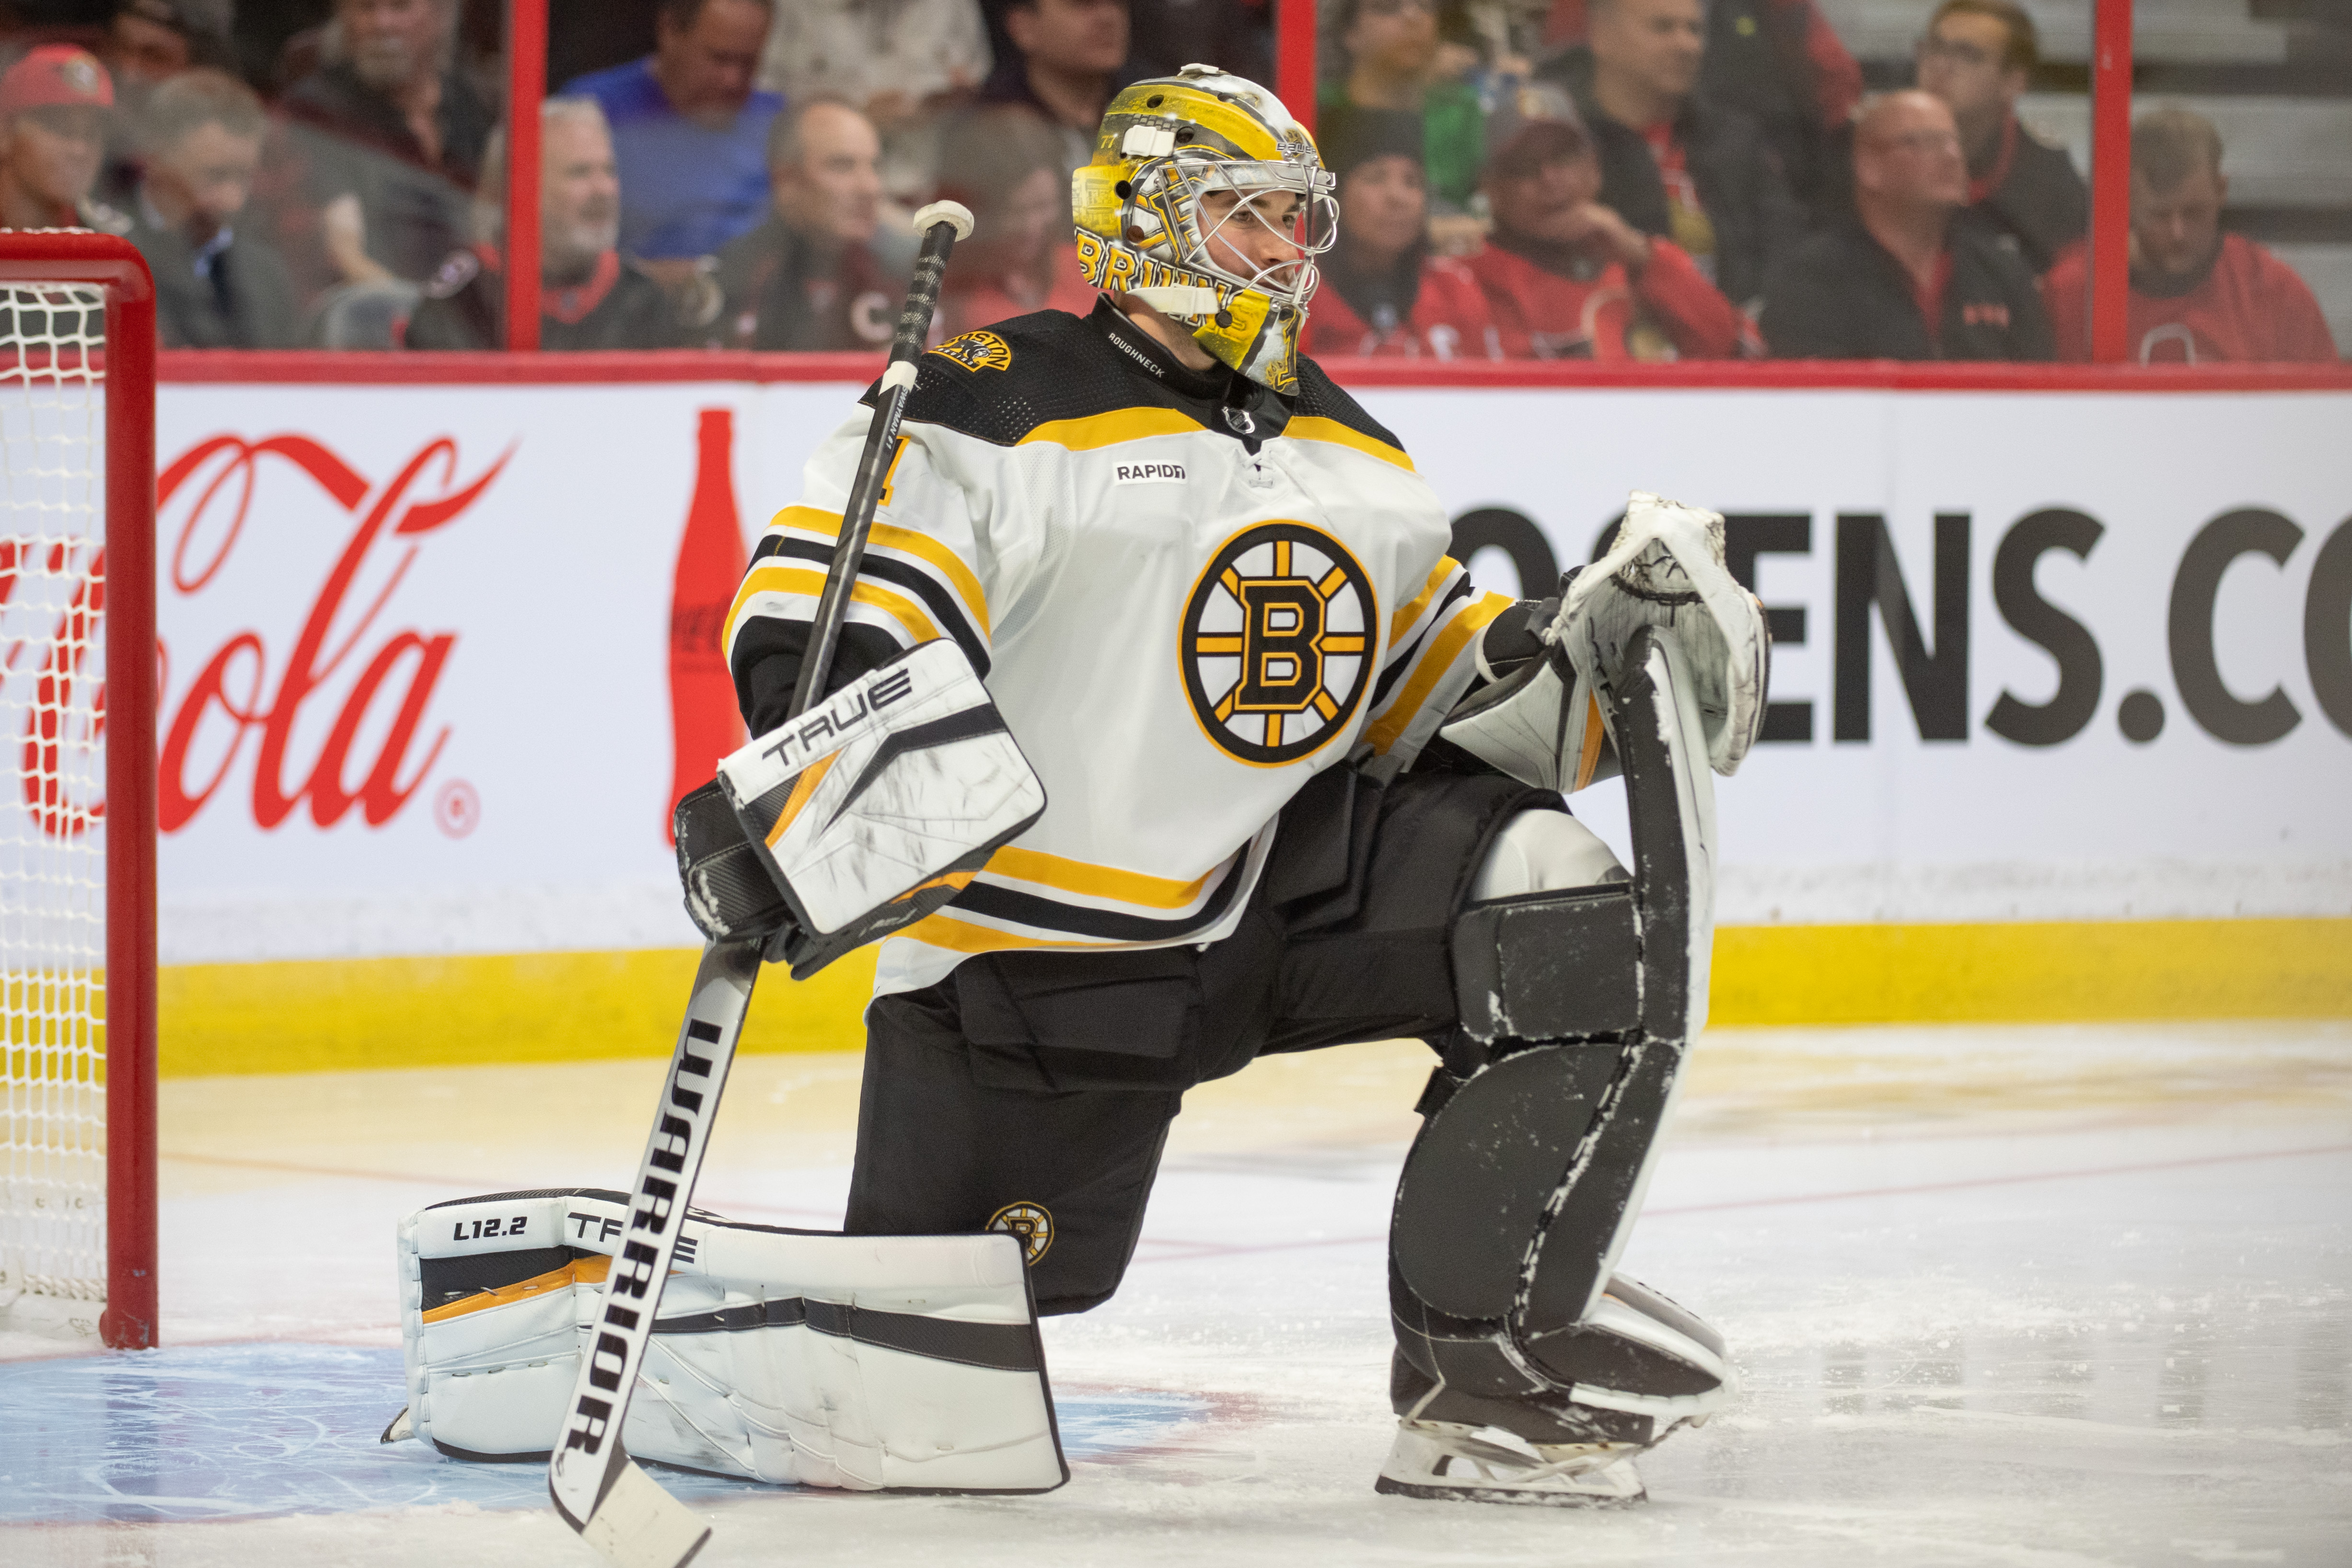 No ill will': Bruins goalie Swayman speaks after arbitration